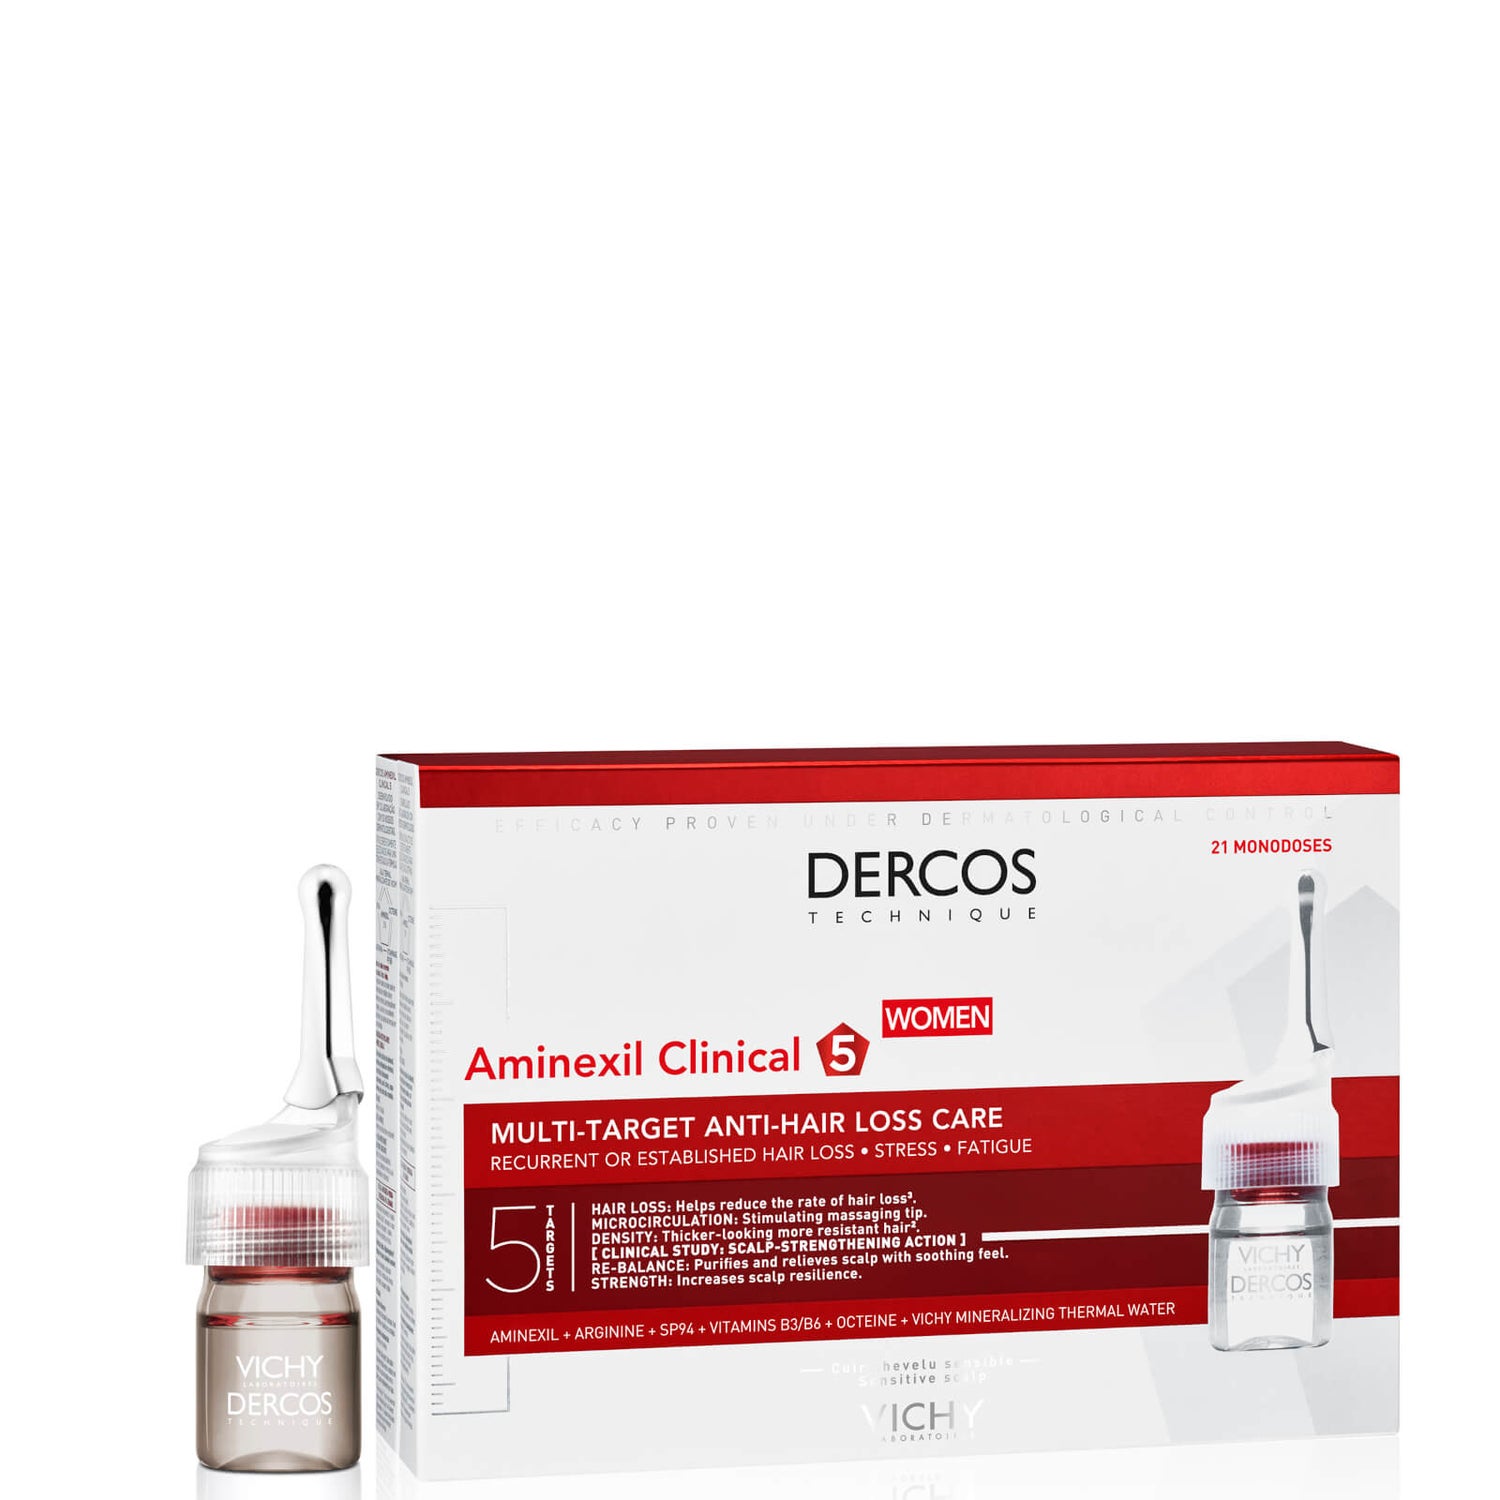 VICHY Dercos Aminexil Clinical 5 Women 21 Monodoses 6ml